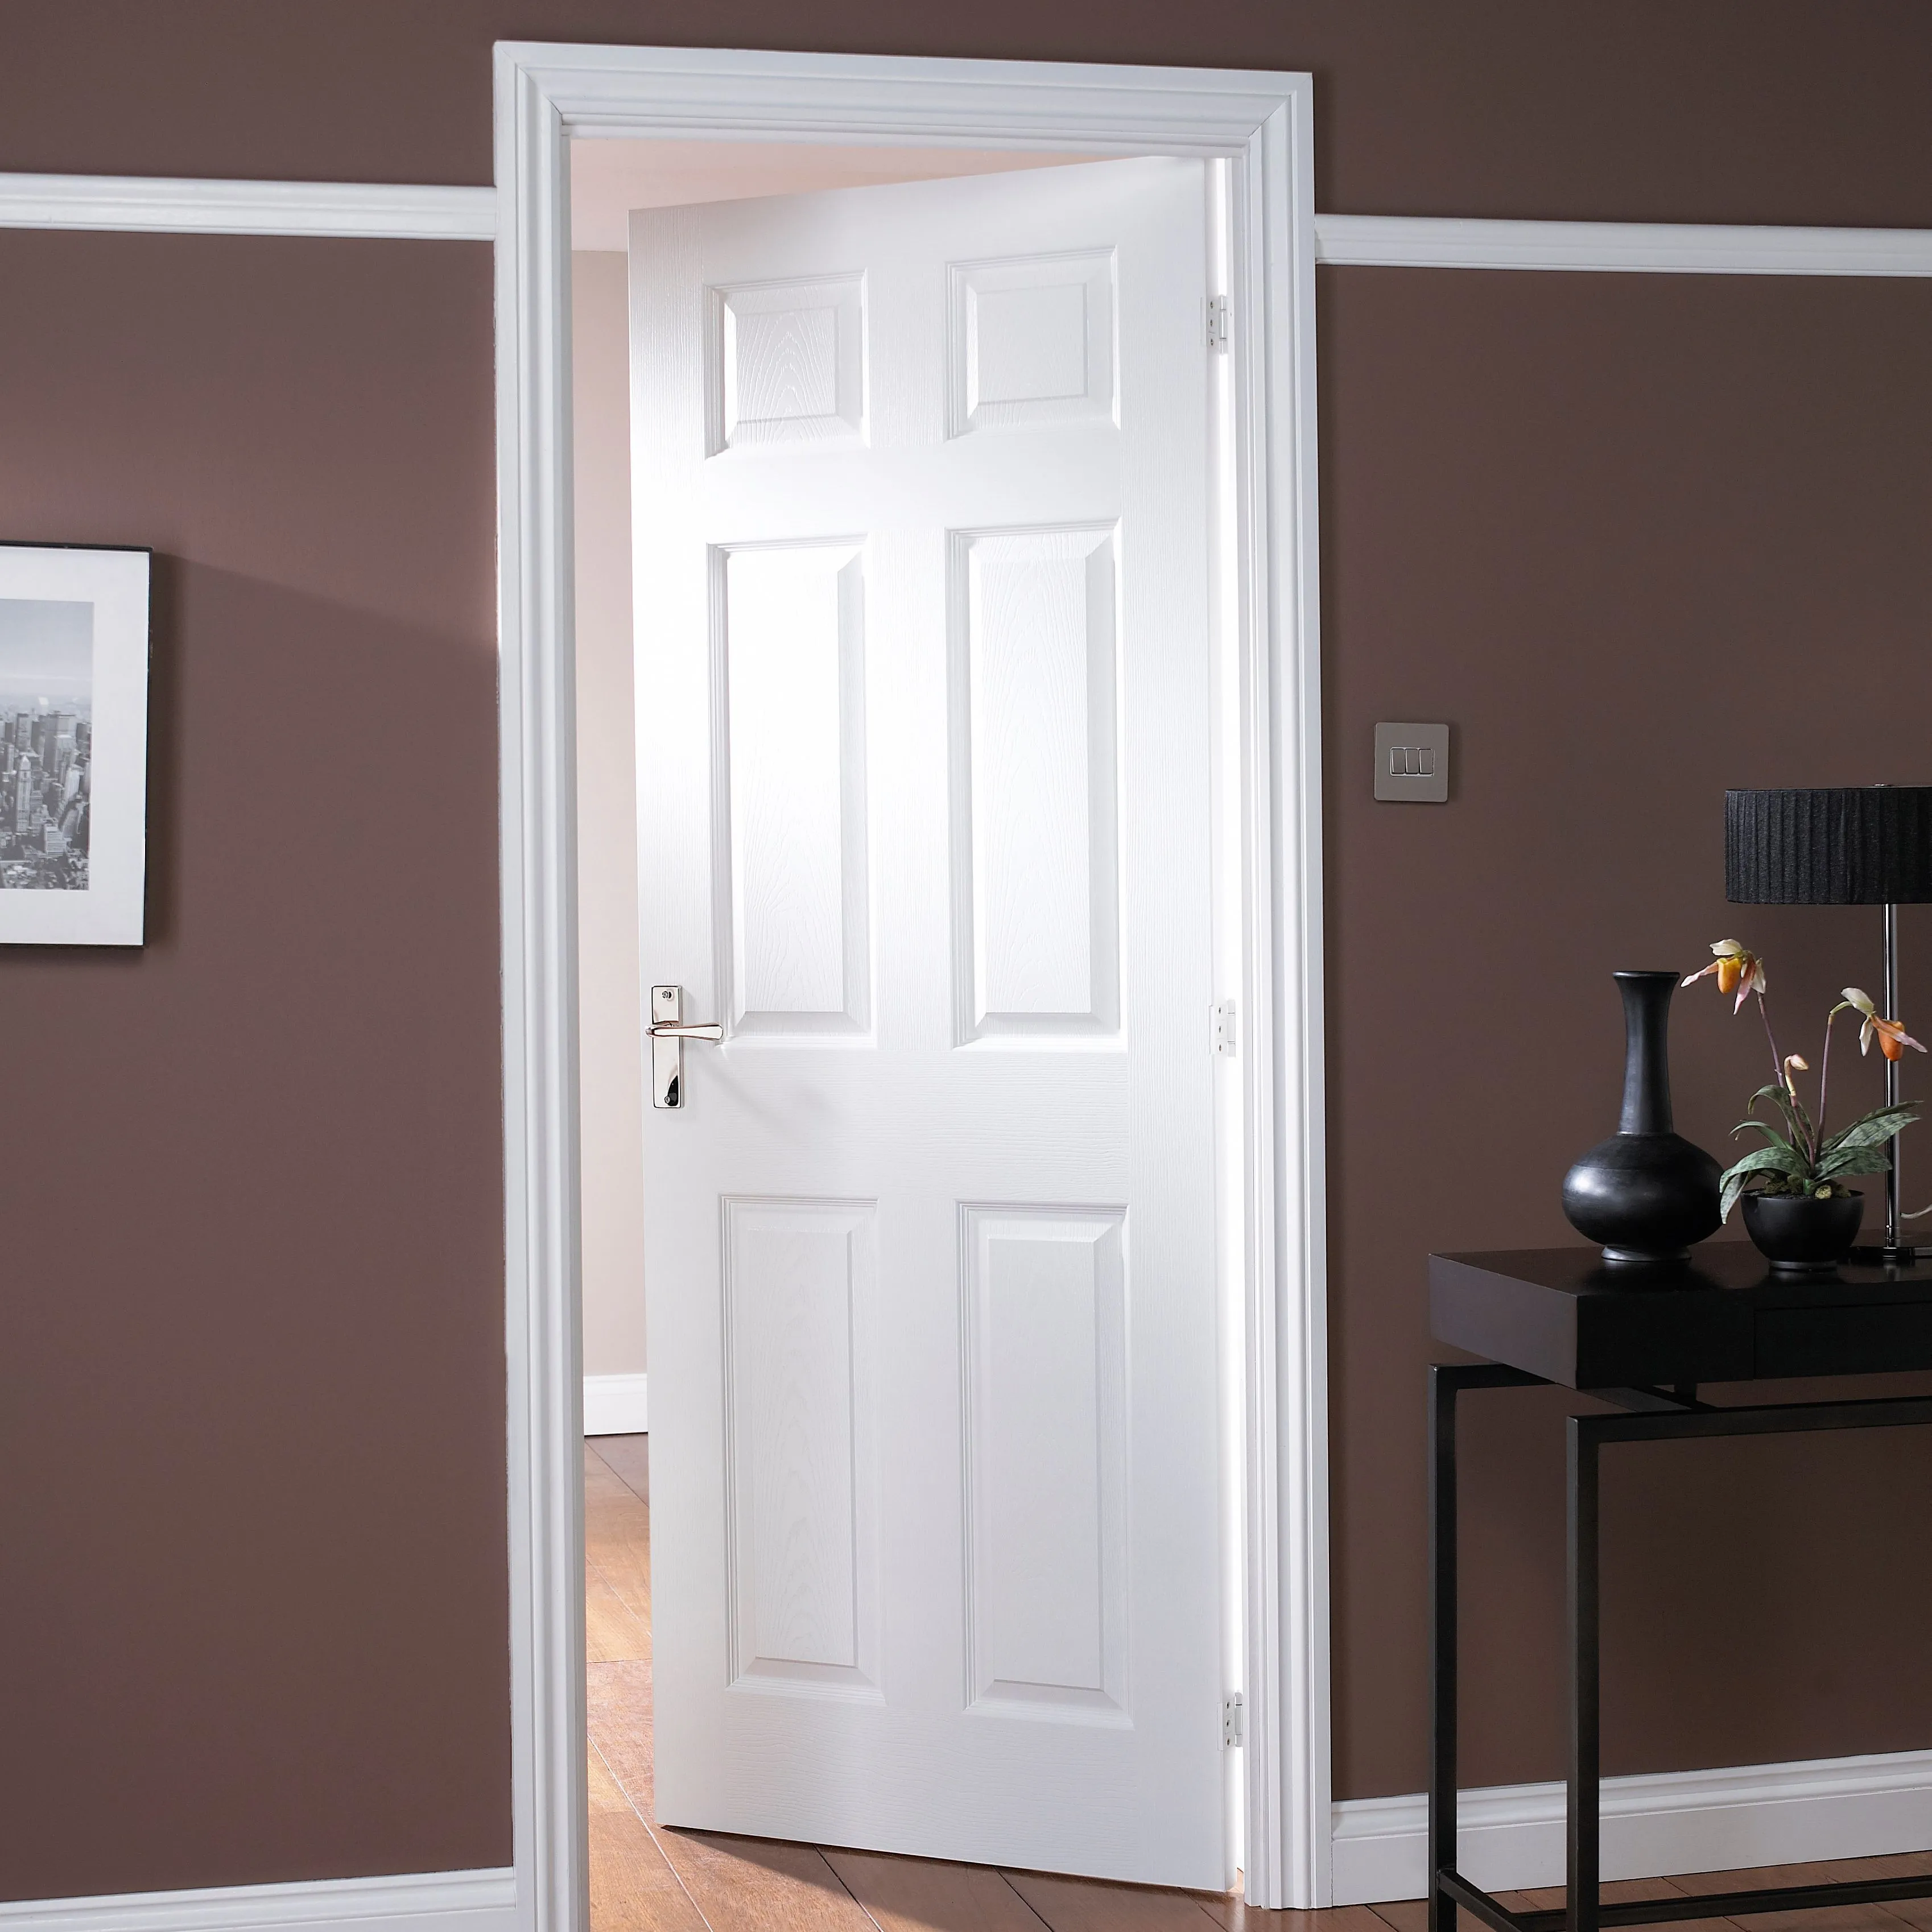 6 panel Primed White Woodgrain effect LH & RH Internal Fire Door, (H)2040mm (W)826mm